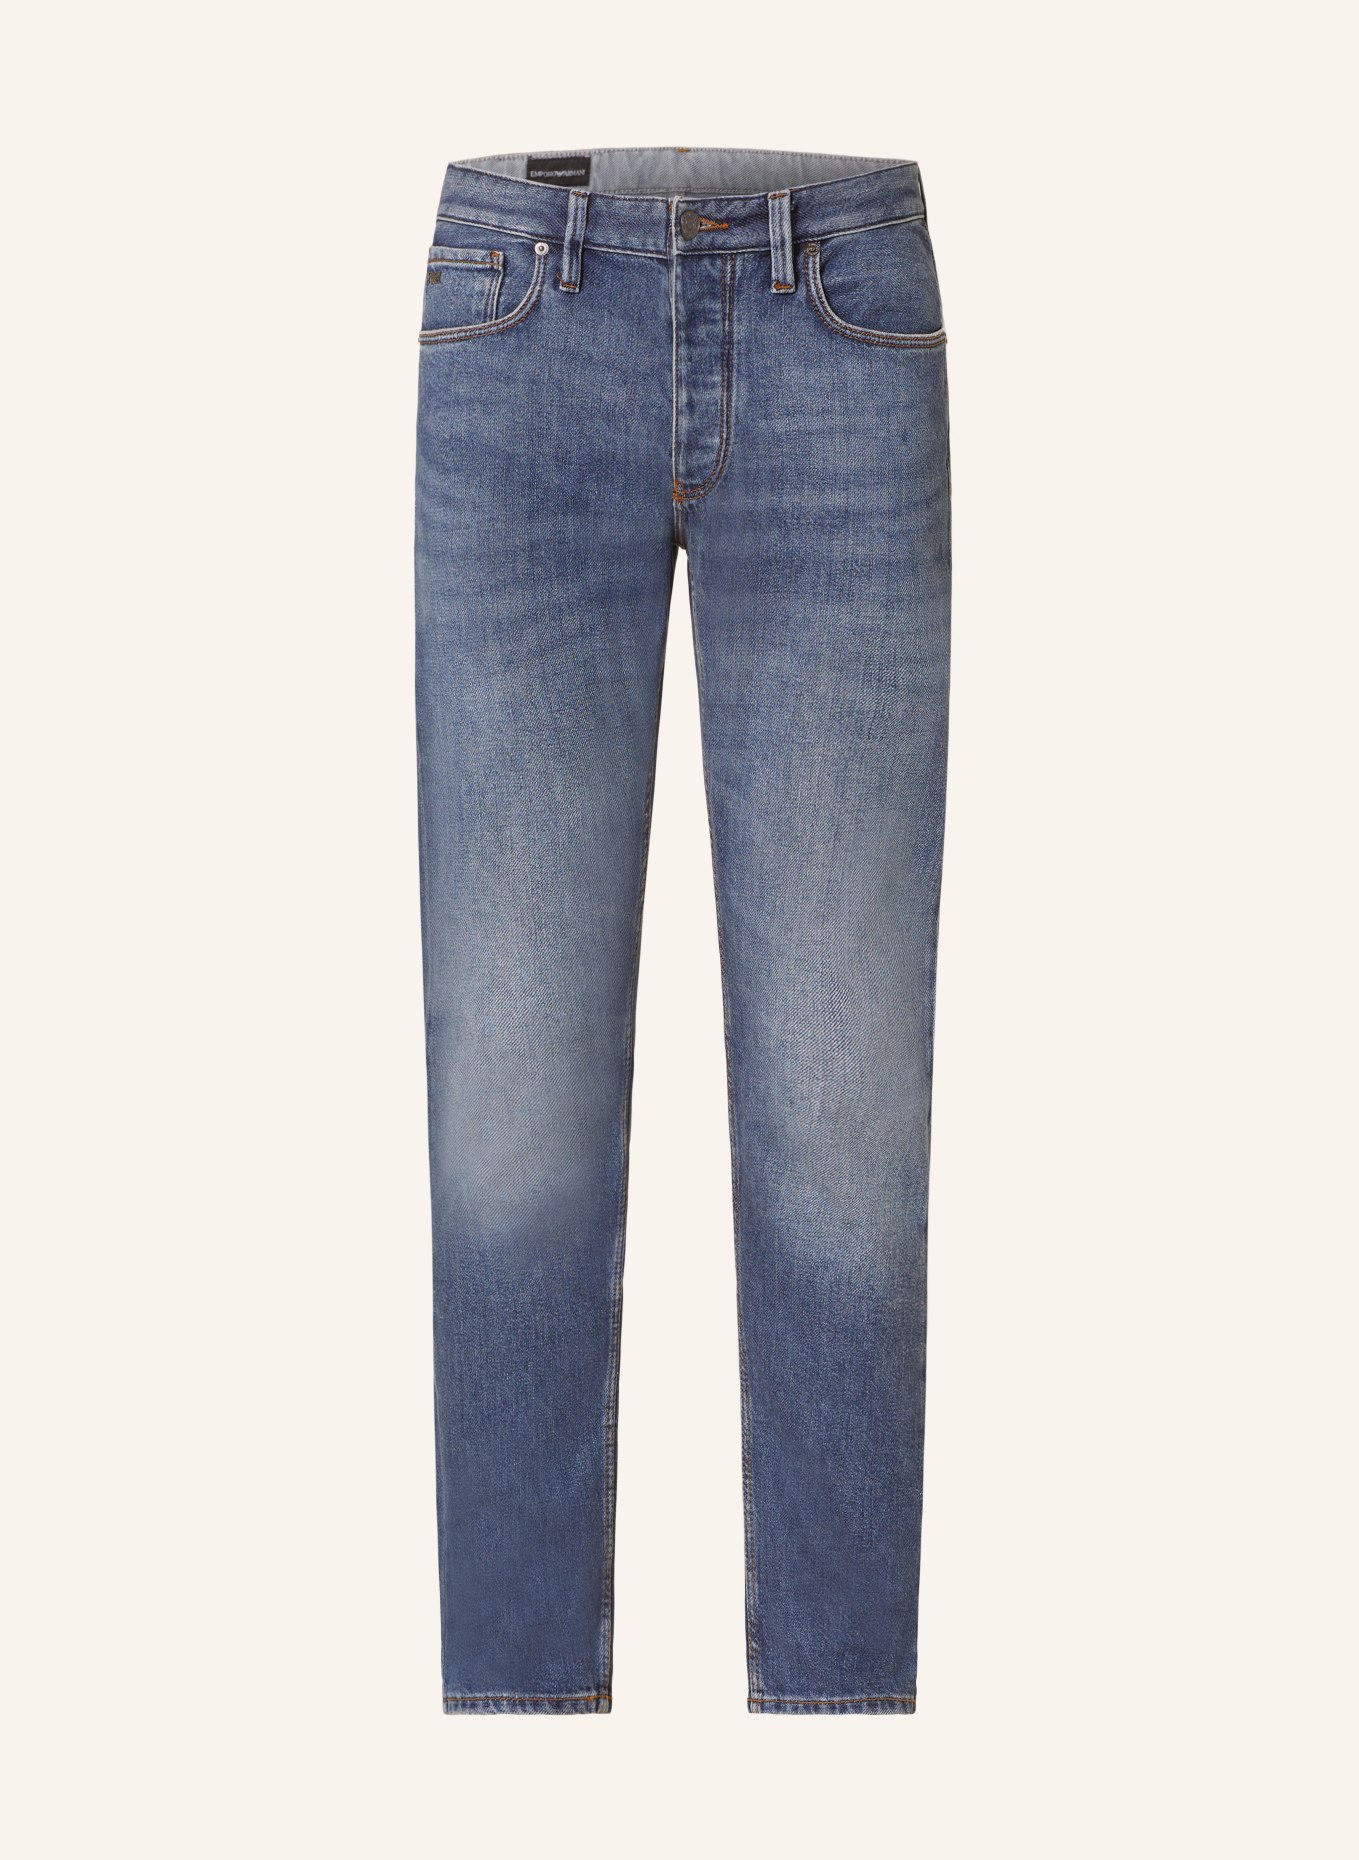 EMPORIO ARMANI Jeans Slim Fit, Farbe: 0942 DENIM BLU MD (Bild 1)